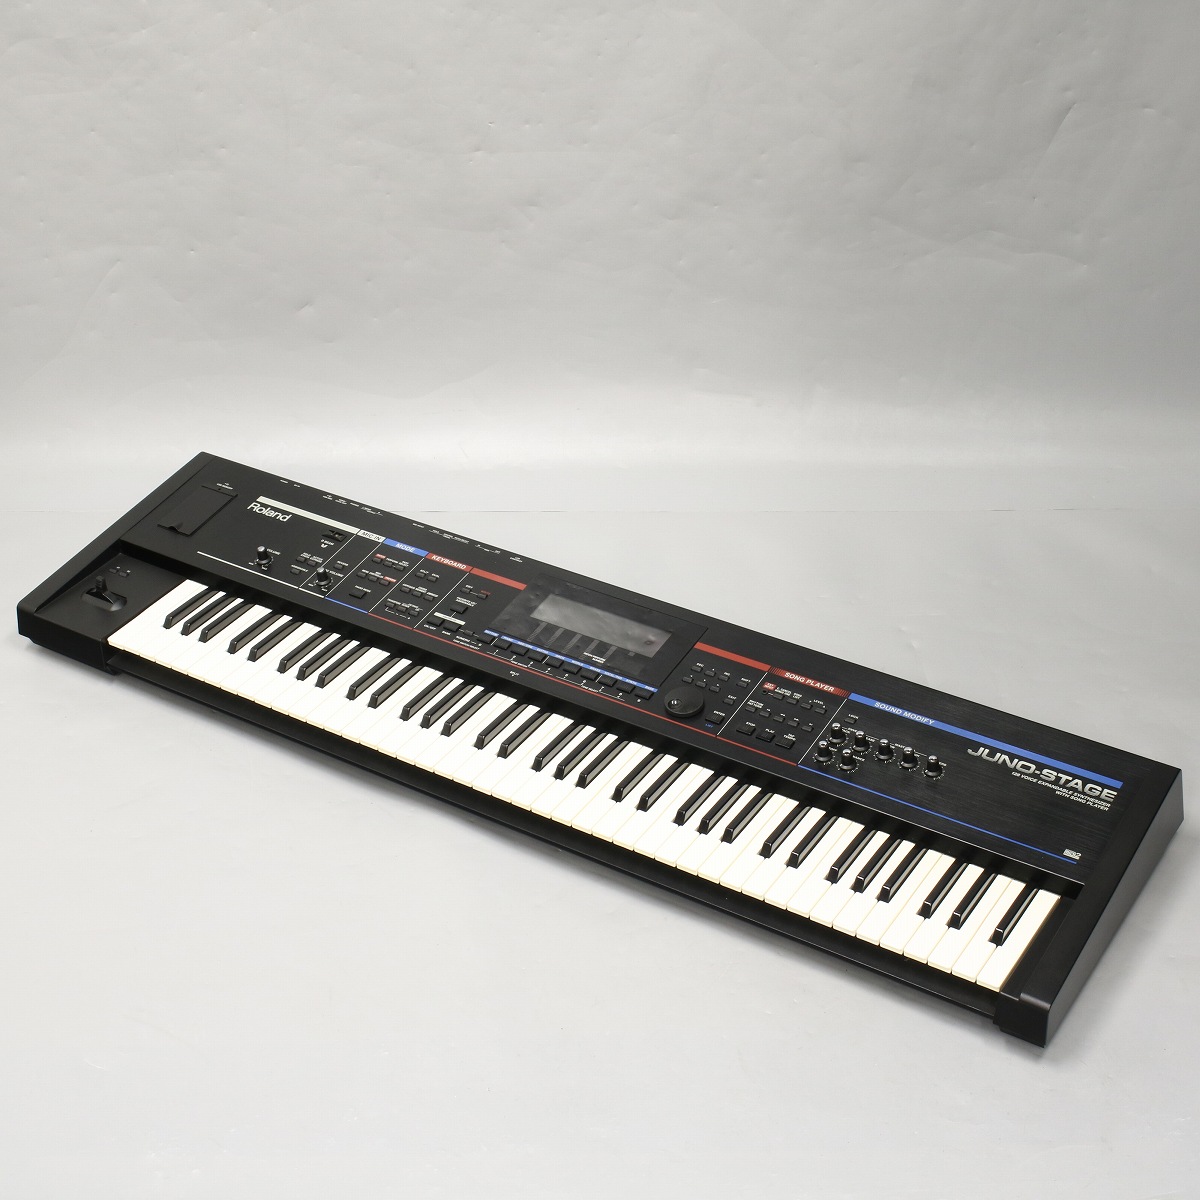 【6768】 Roland JUNO-stage 76鍵盤 シンセサイザー